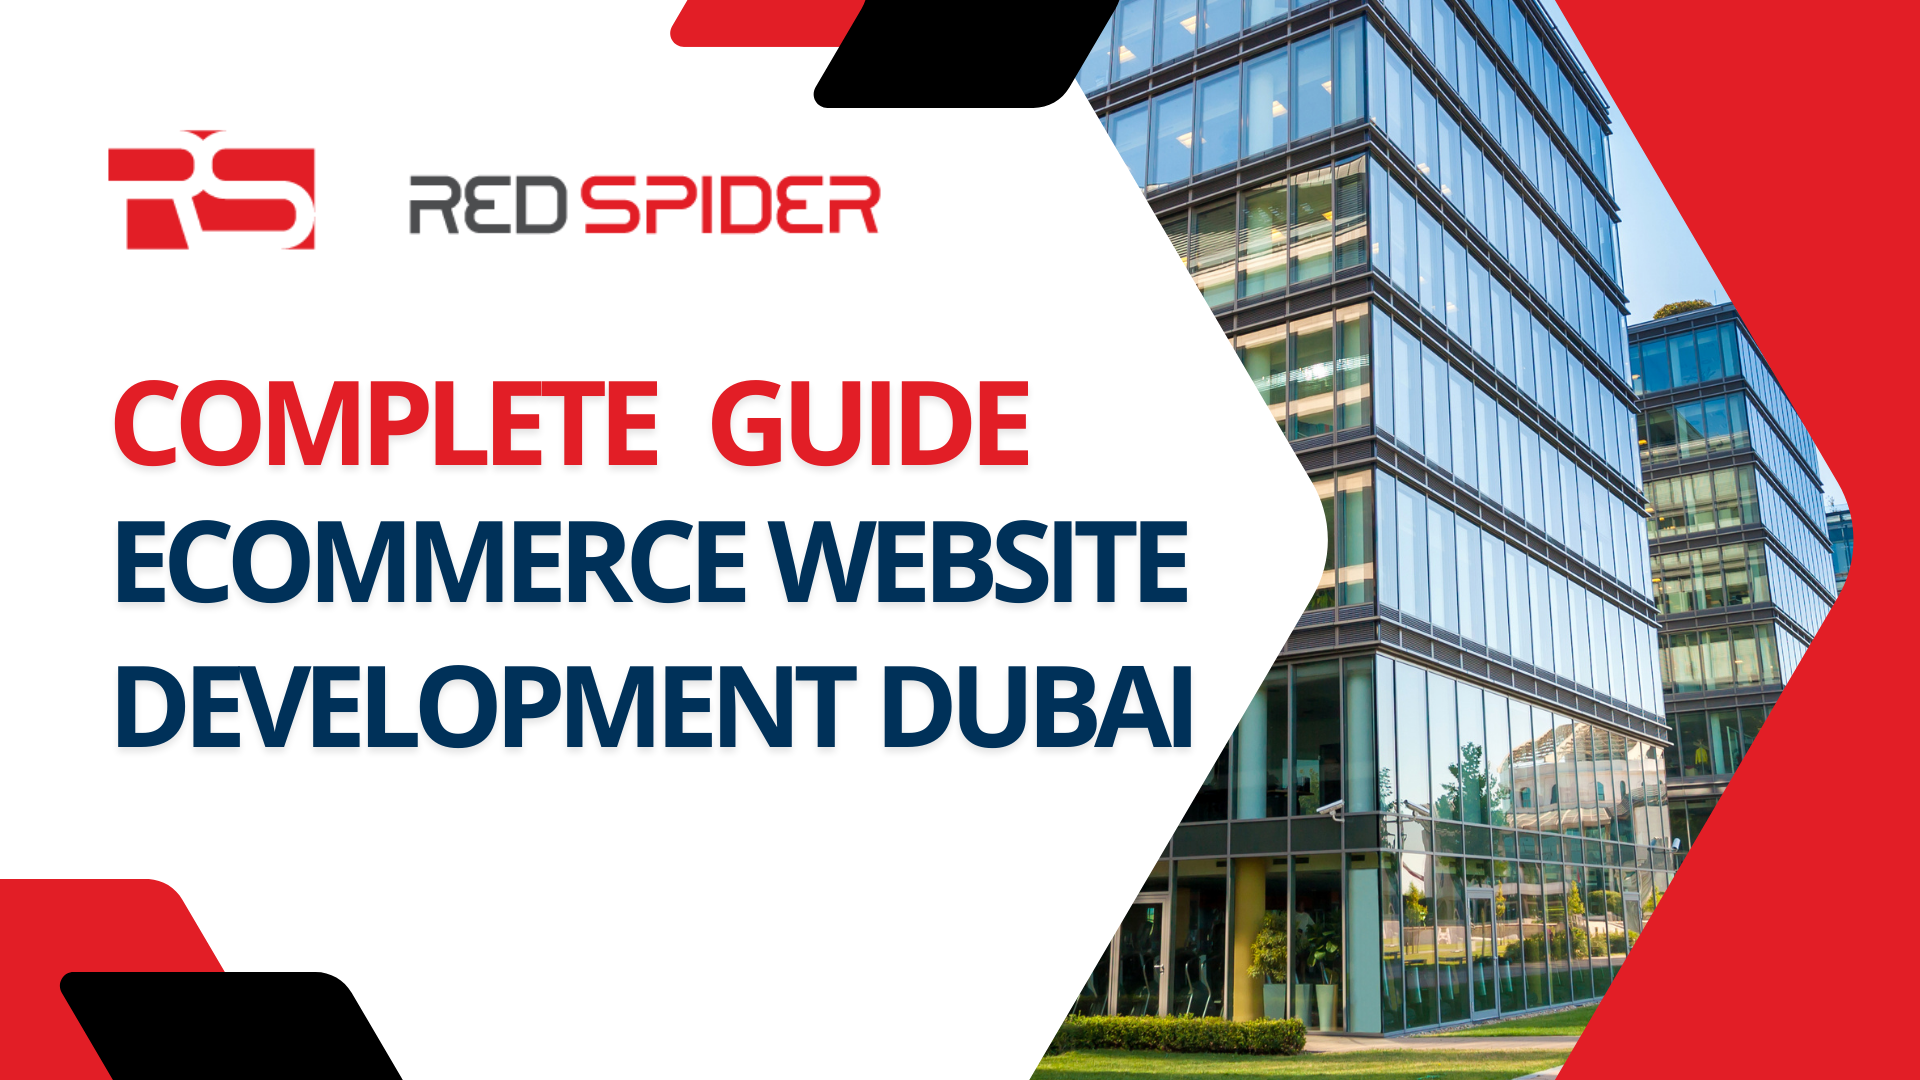 E-commerce website development Dubai: A Complete Guide